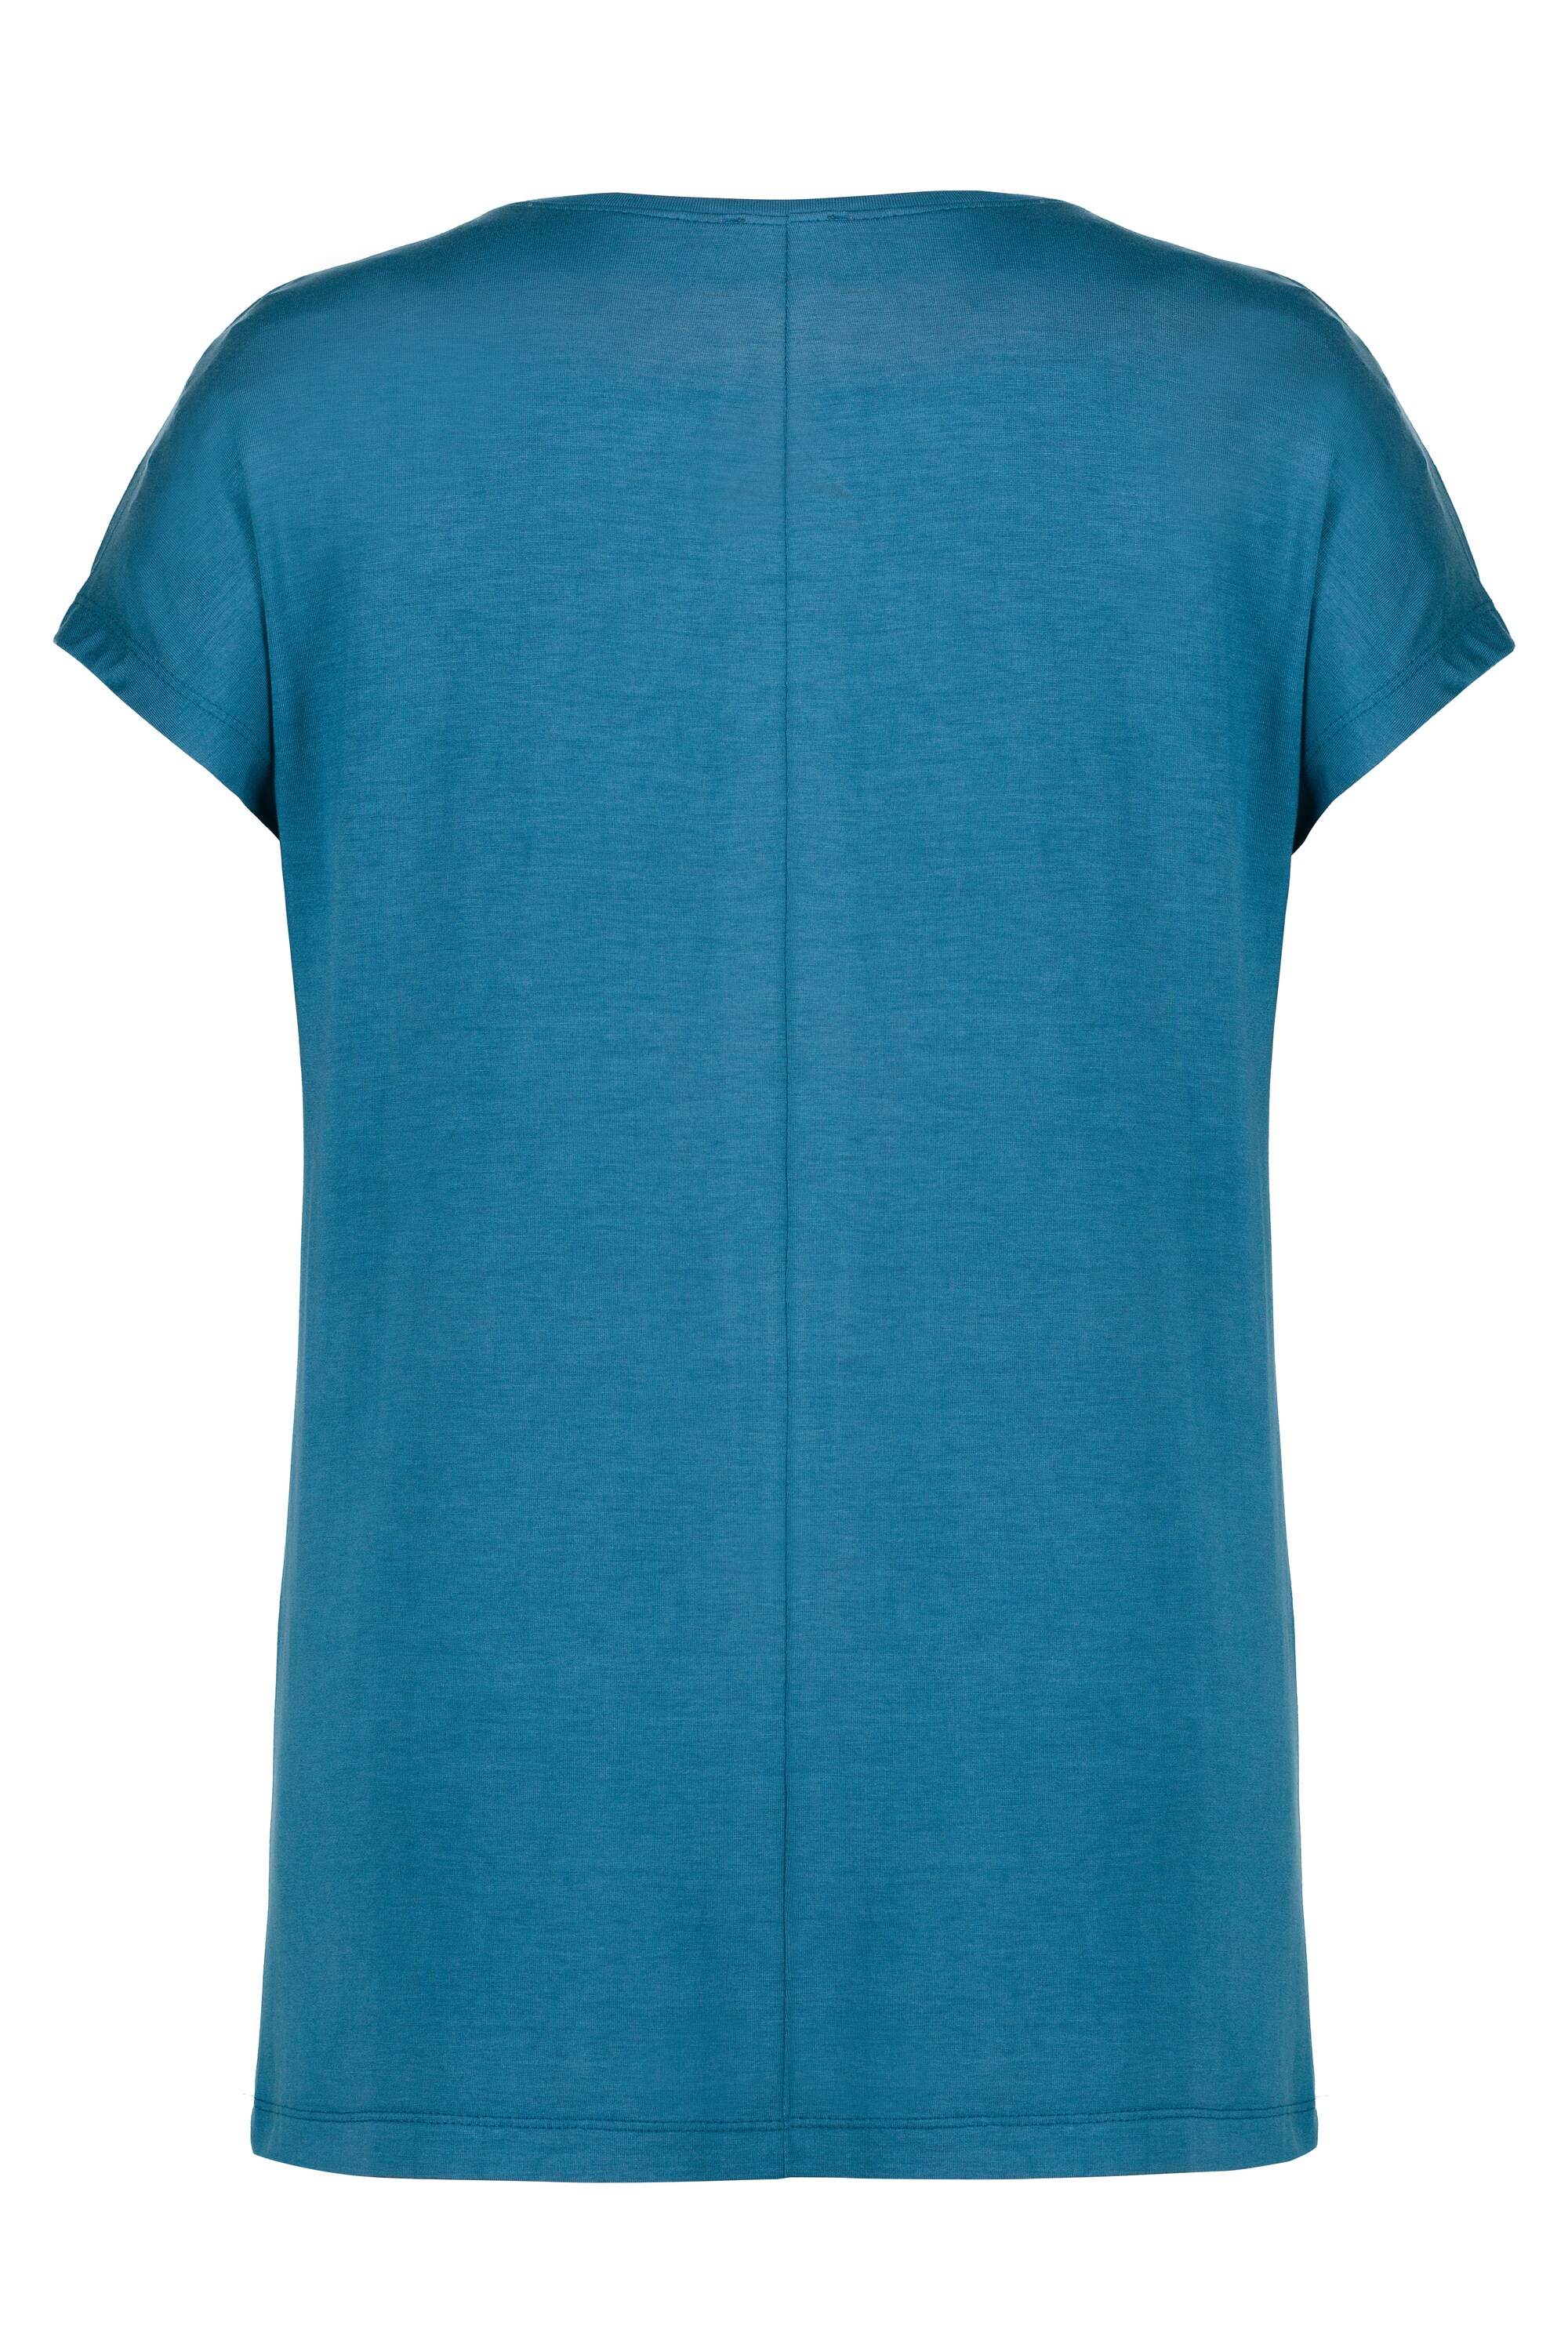 Gina Laura T-Shirt in Blau 